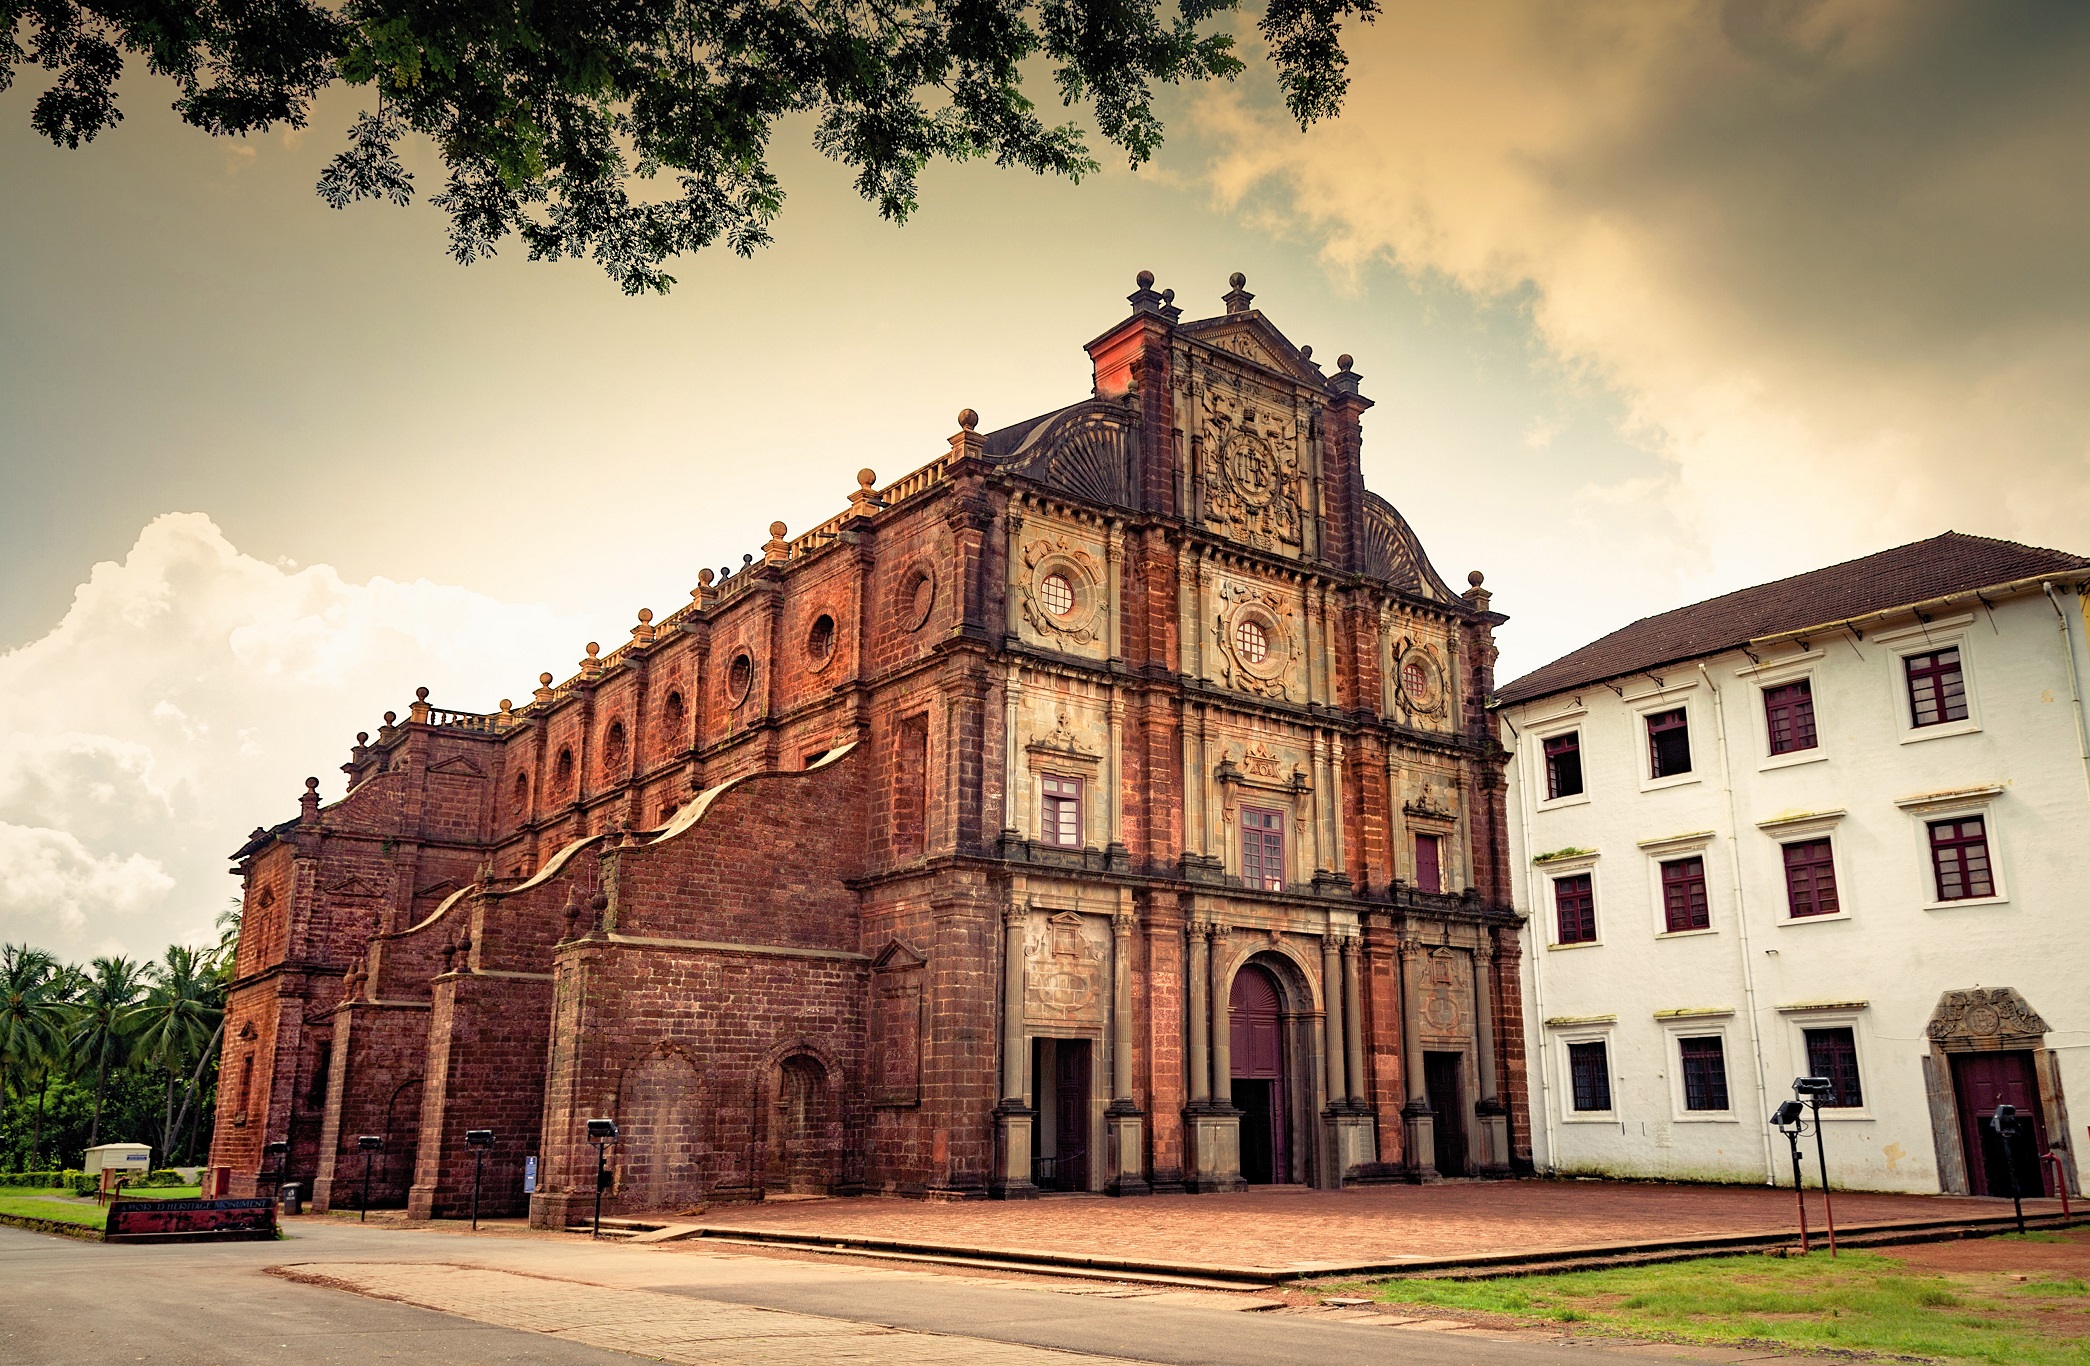 Ancient Basilica of Bom Jesus church at Goa, India